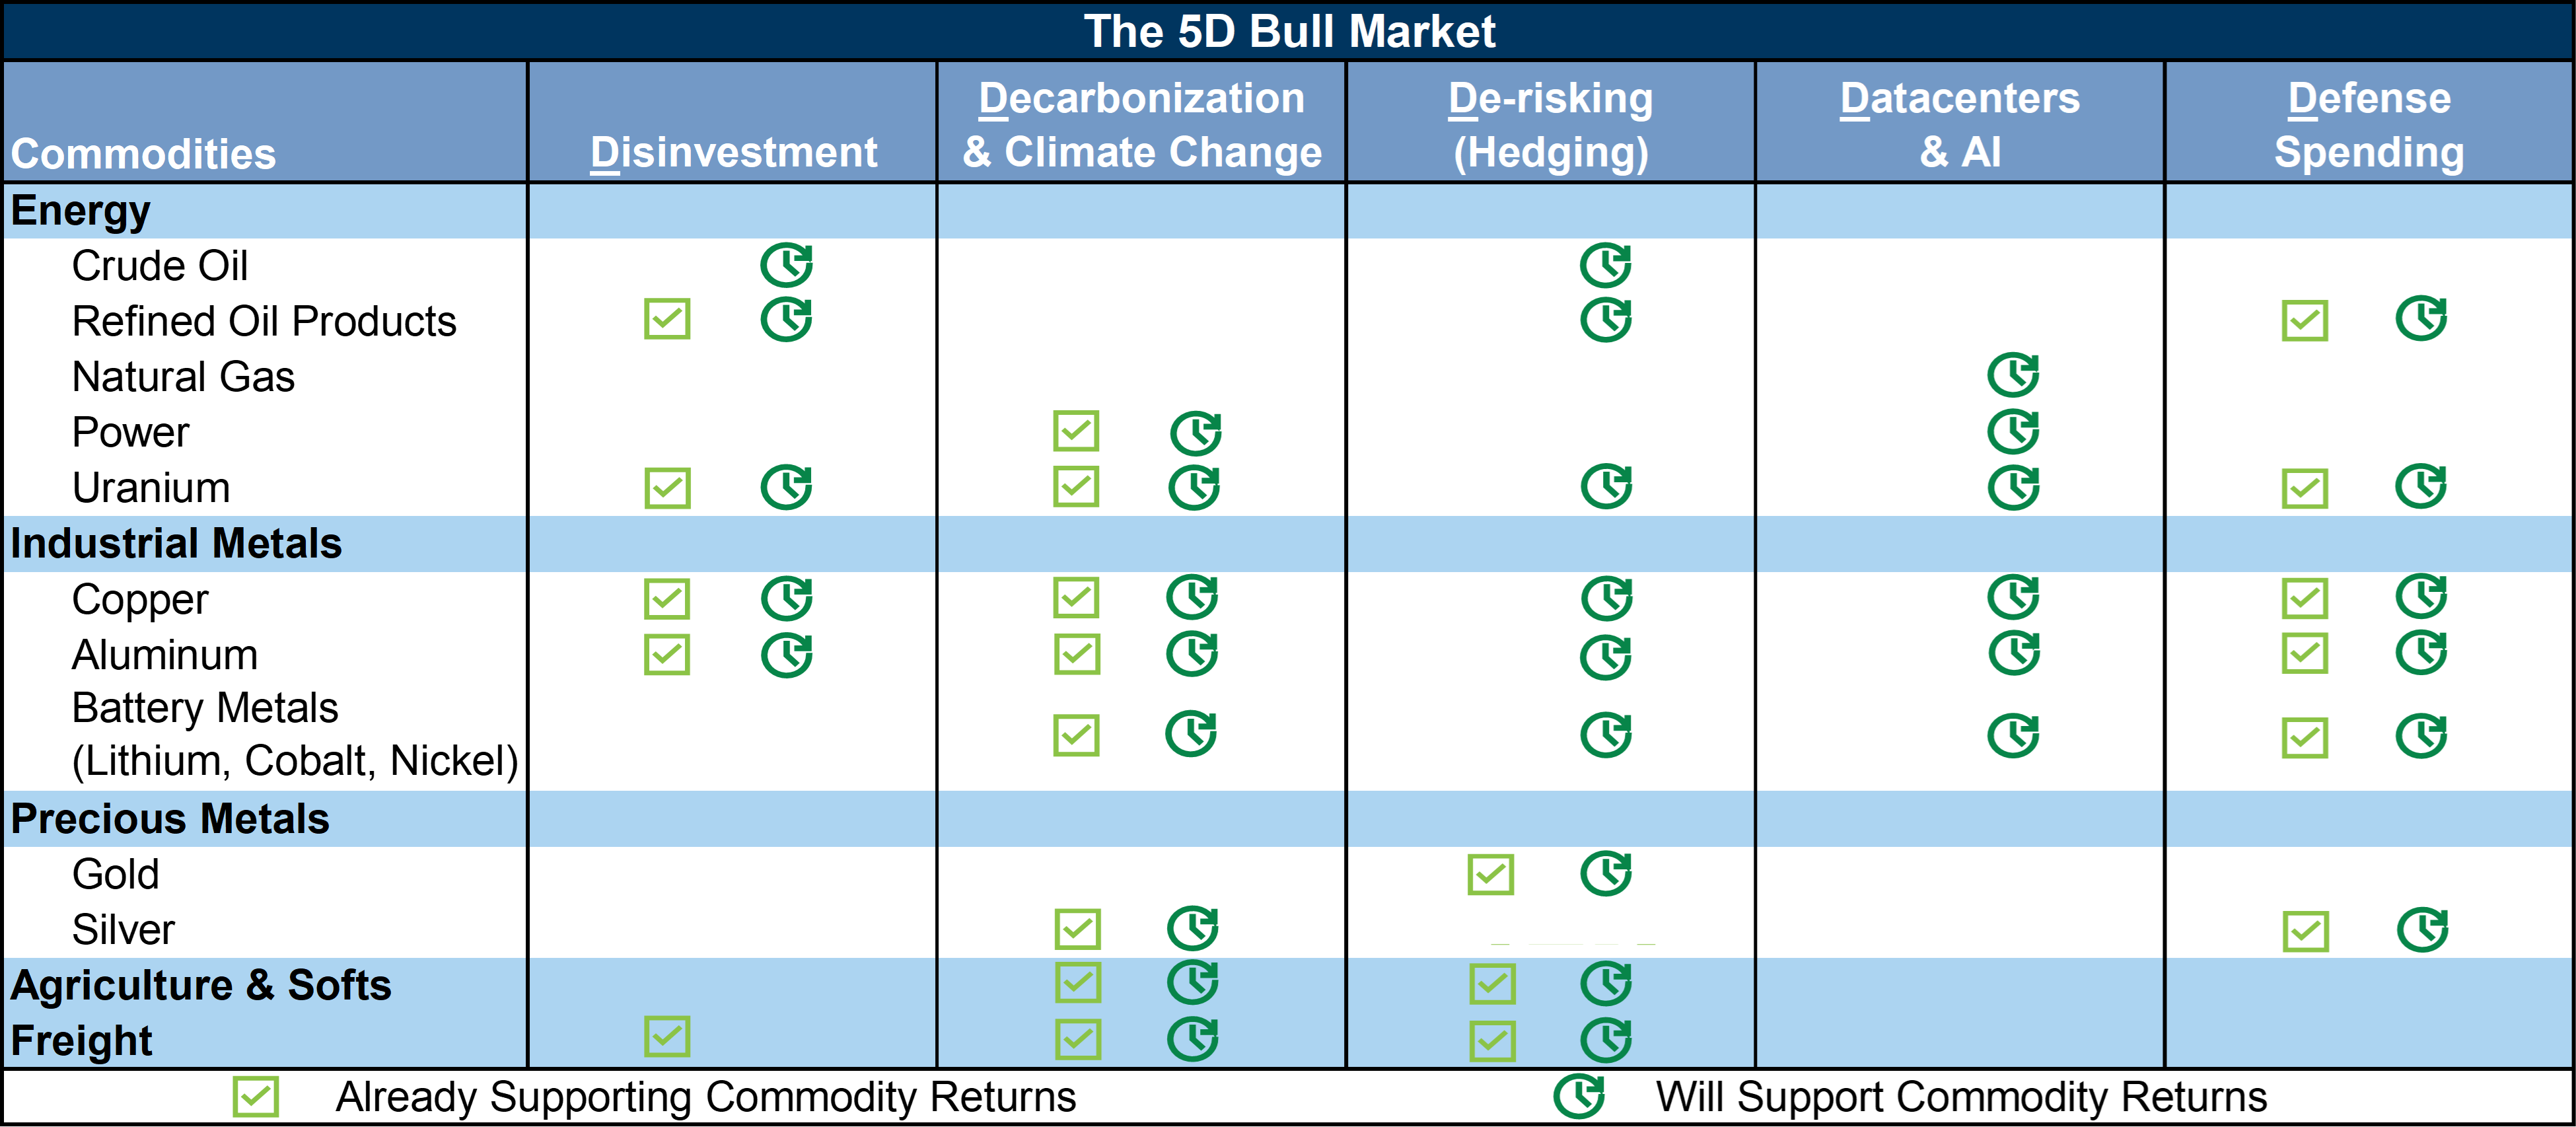 The 5D commodity bull market according to Goldman Sachs